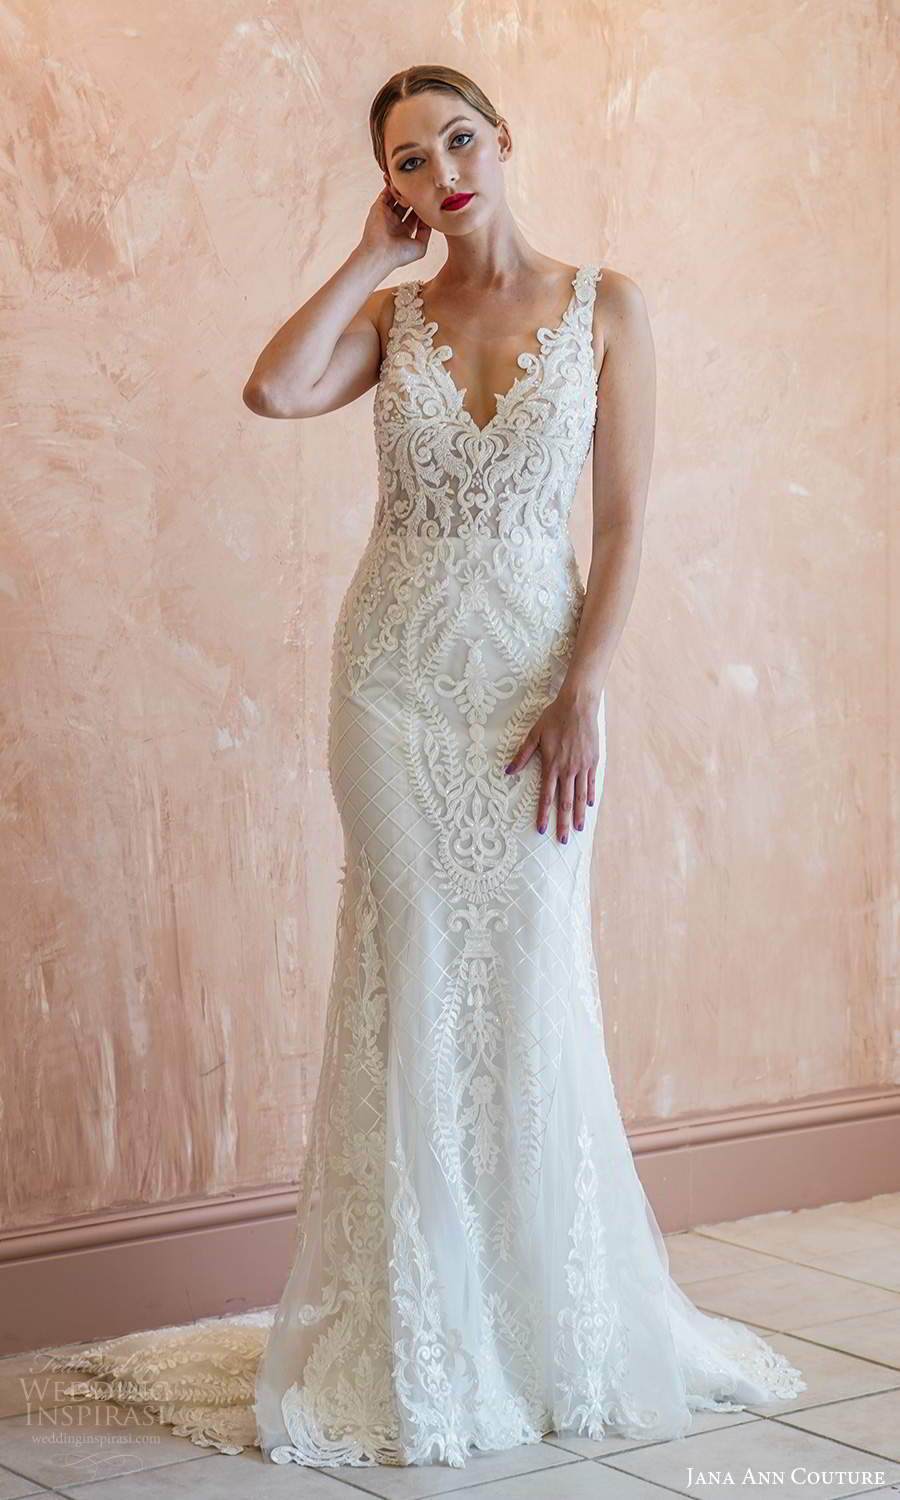 jana ann couture 2021 bridal sleeveless straps v neckline fully embellished sheath wedding dress chapel train (13) mv